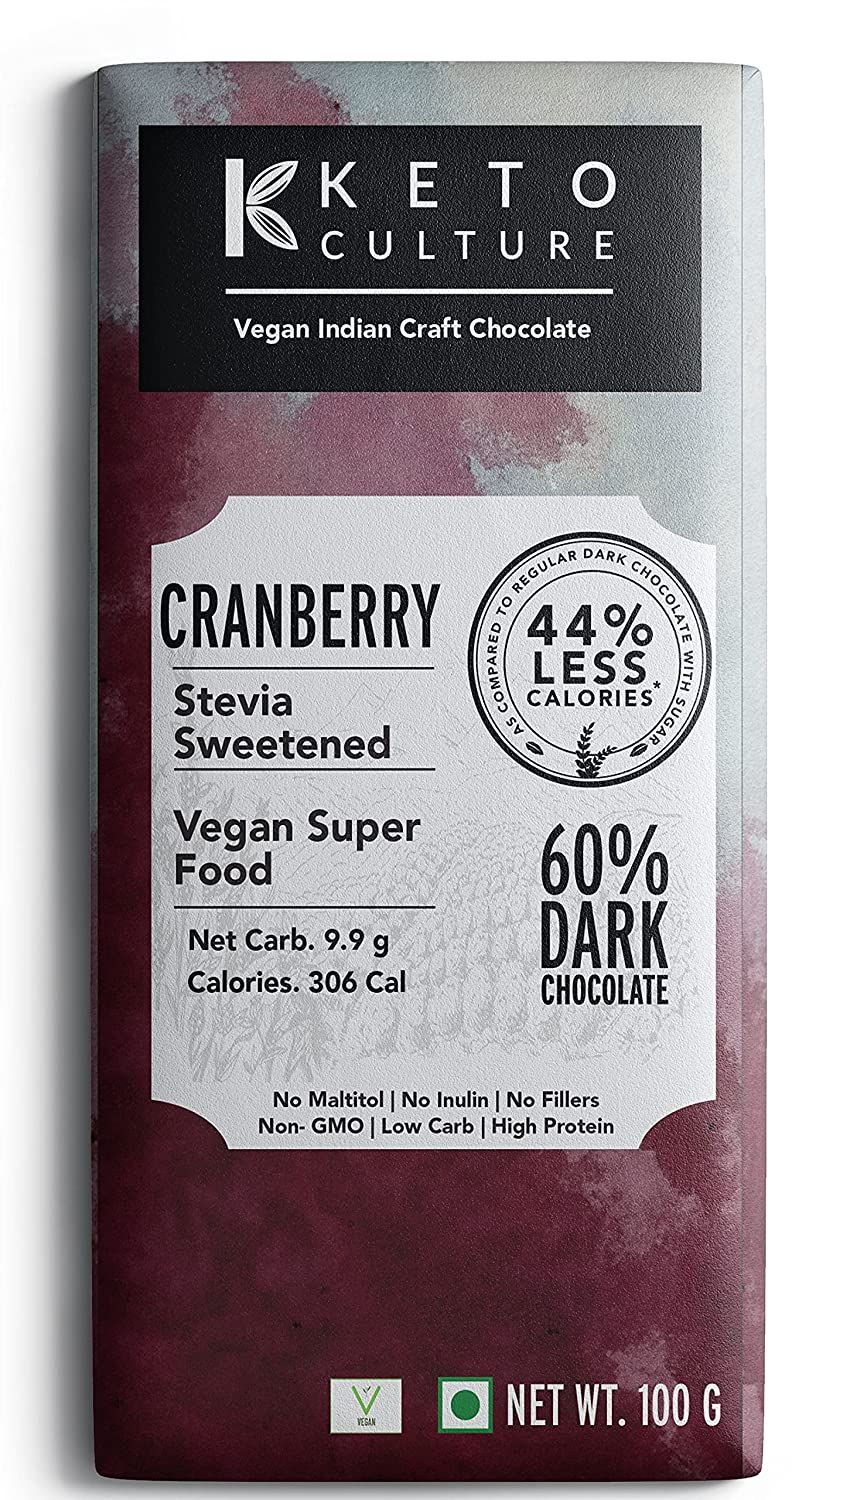 Keto Culture Cranberry Vegan Dark Chocolate Image